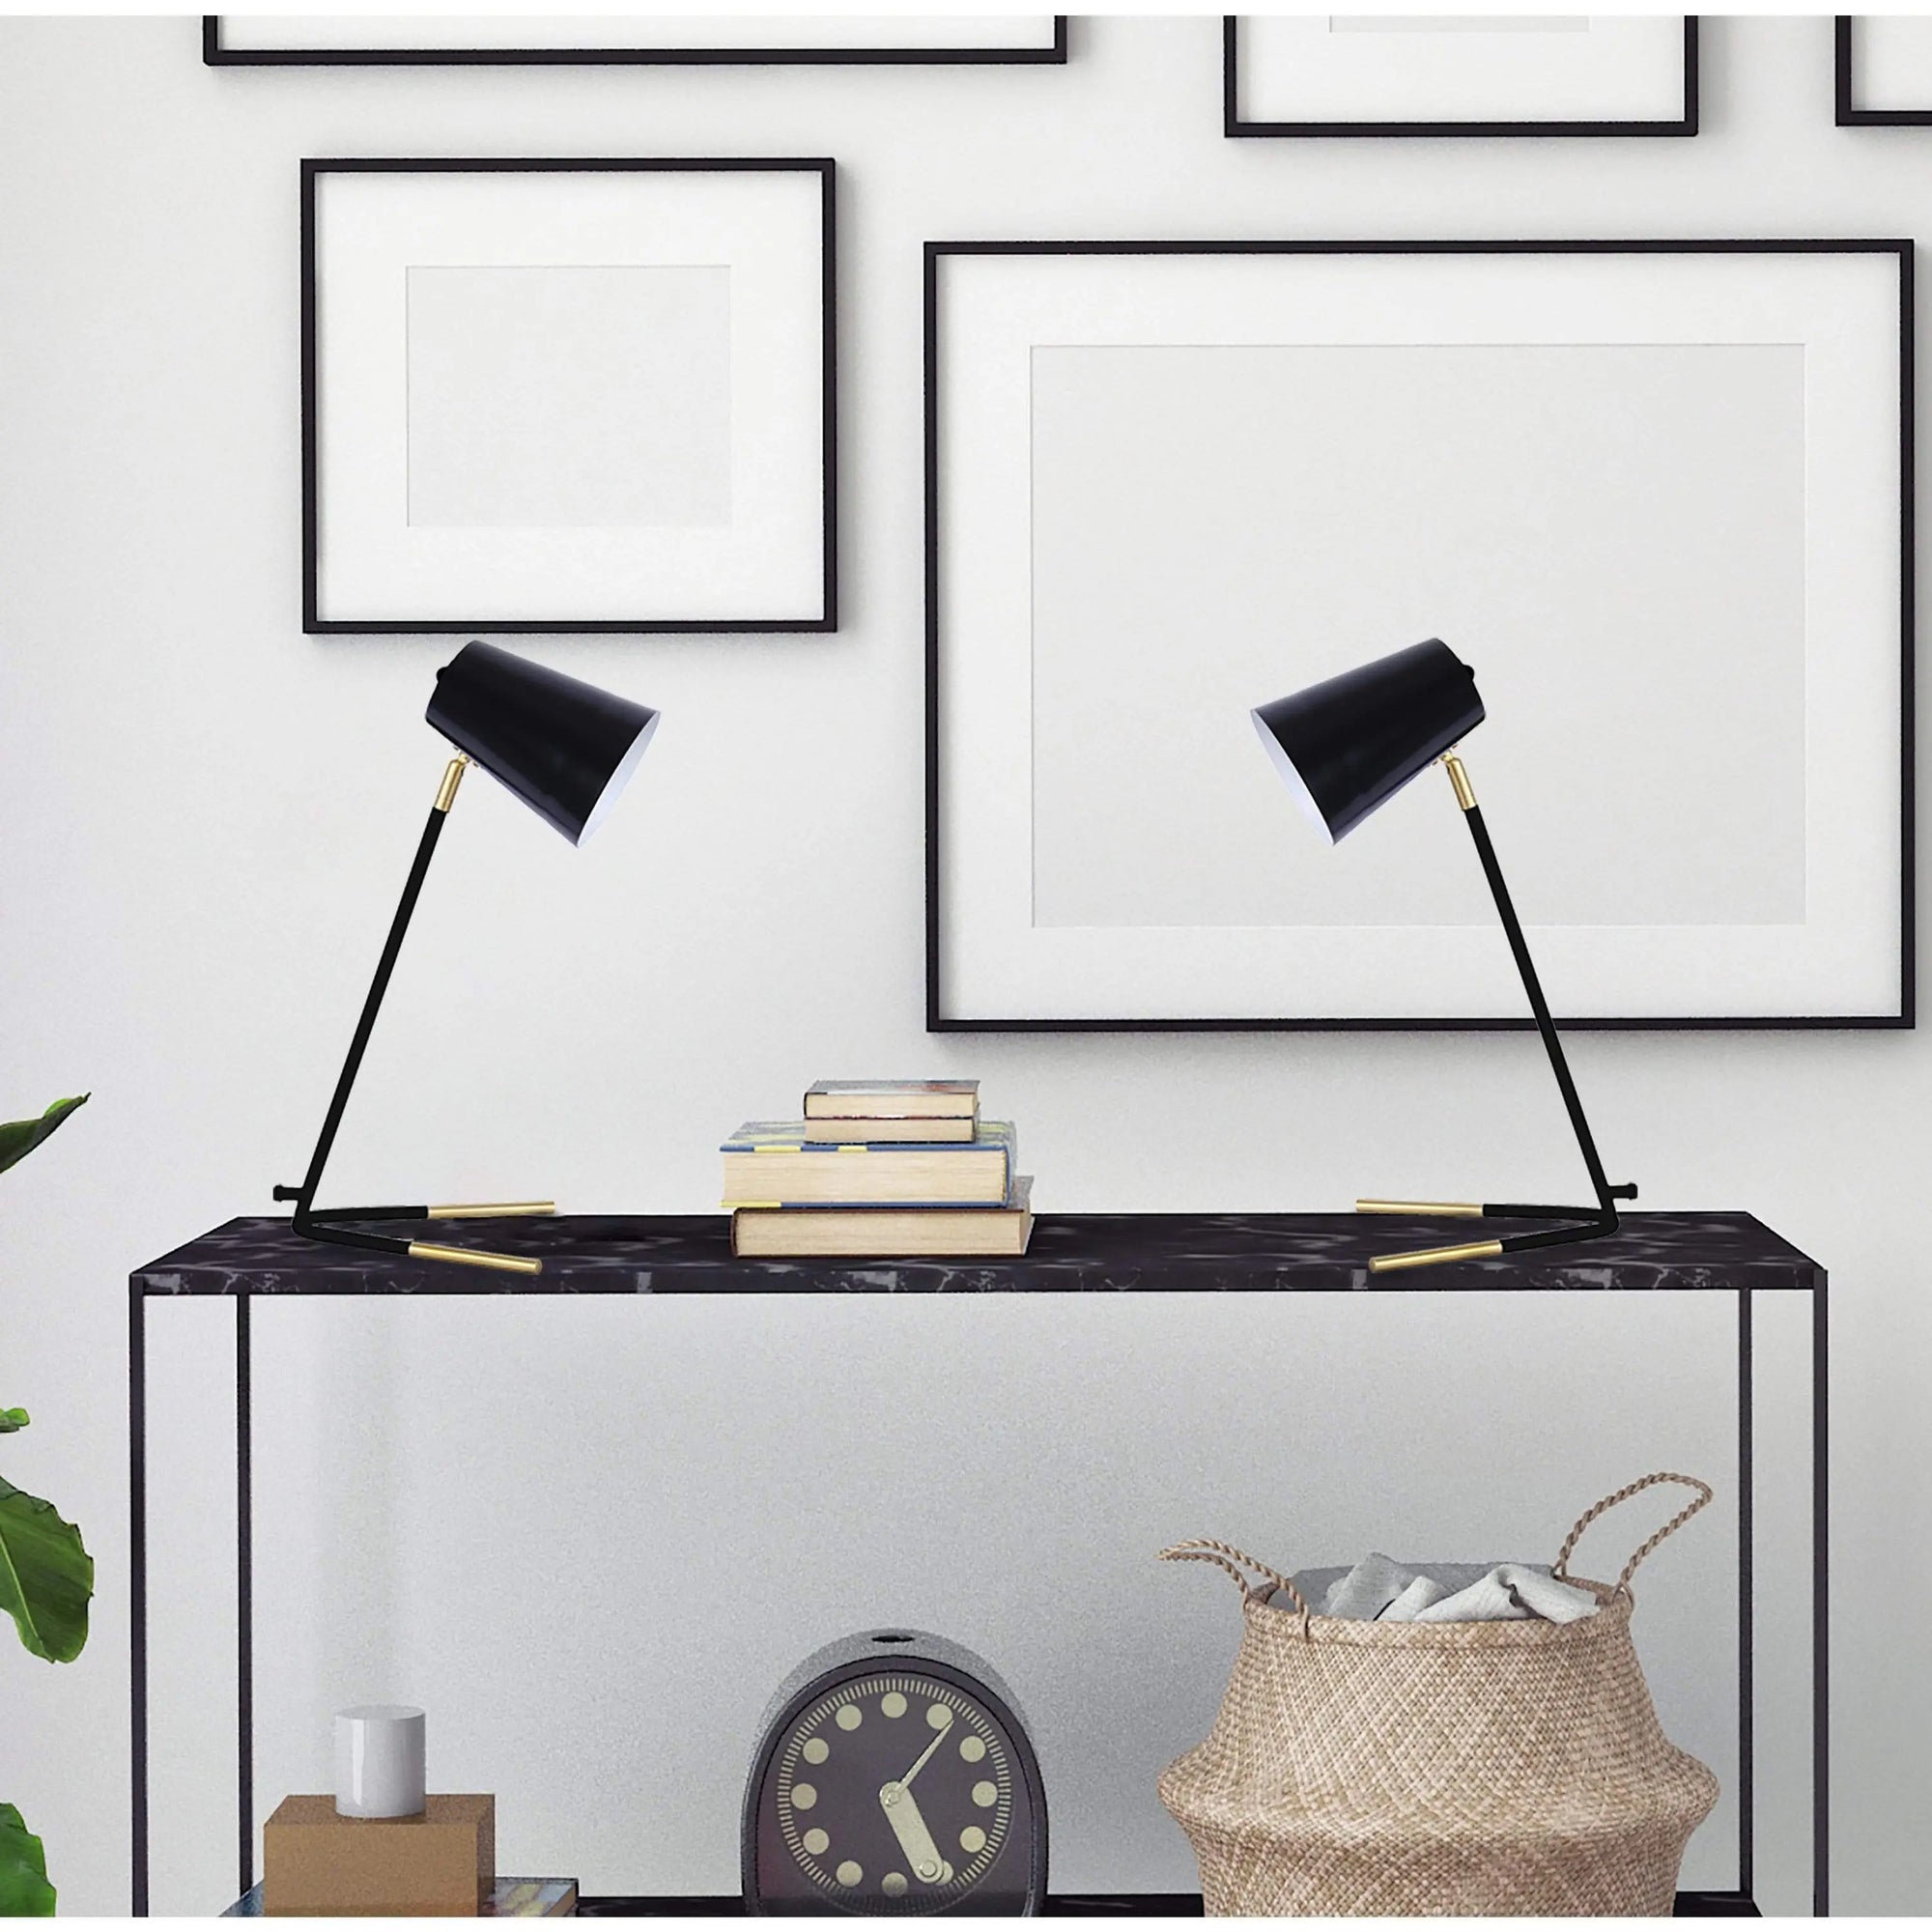 Grandview Gallery Desk Lamp Matte Desk Lamp with Gold Accents (2) — Black